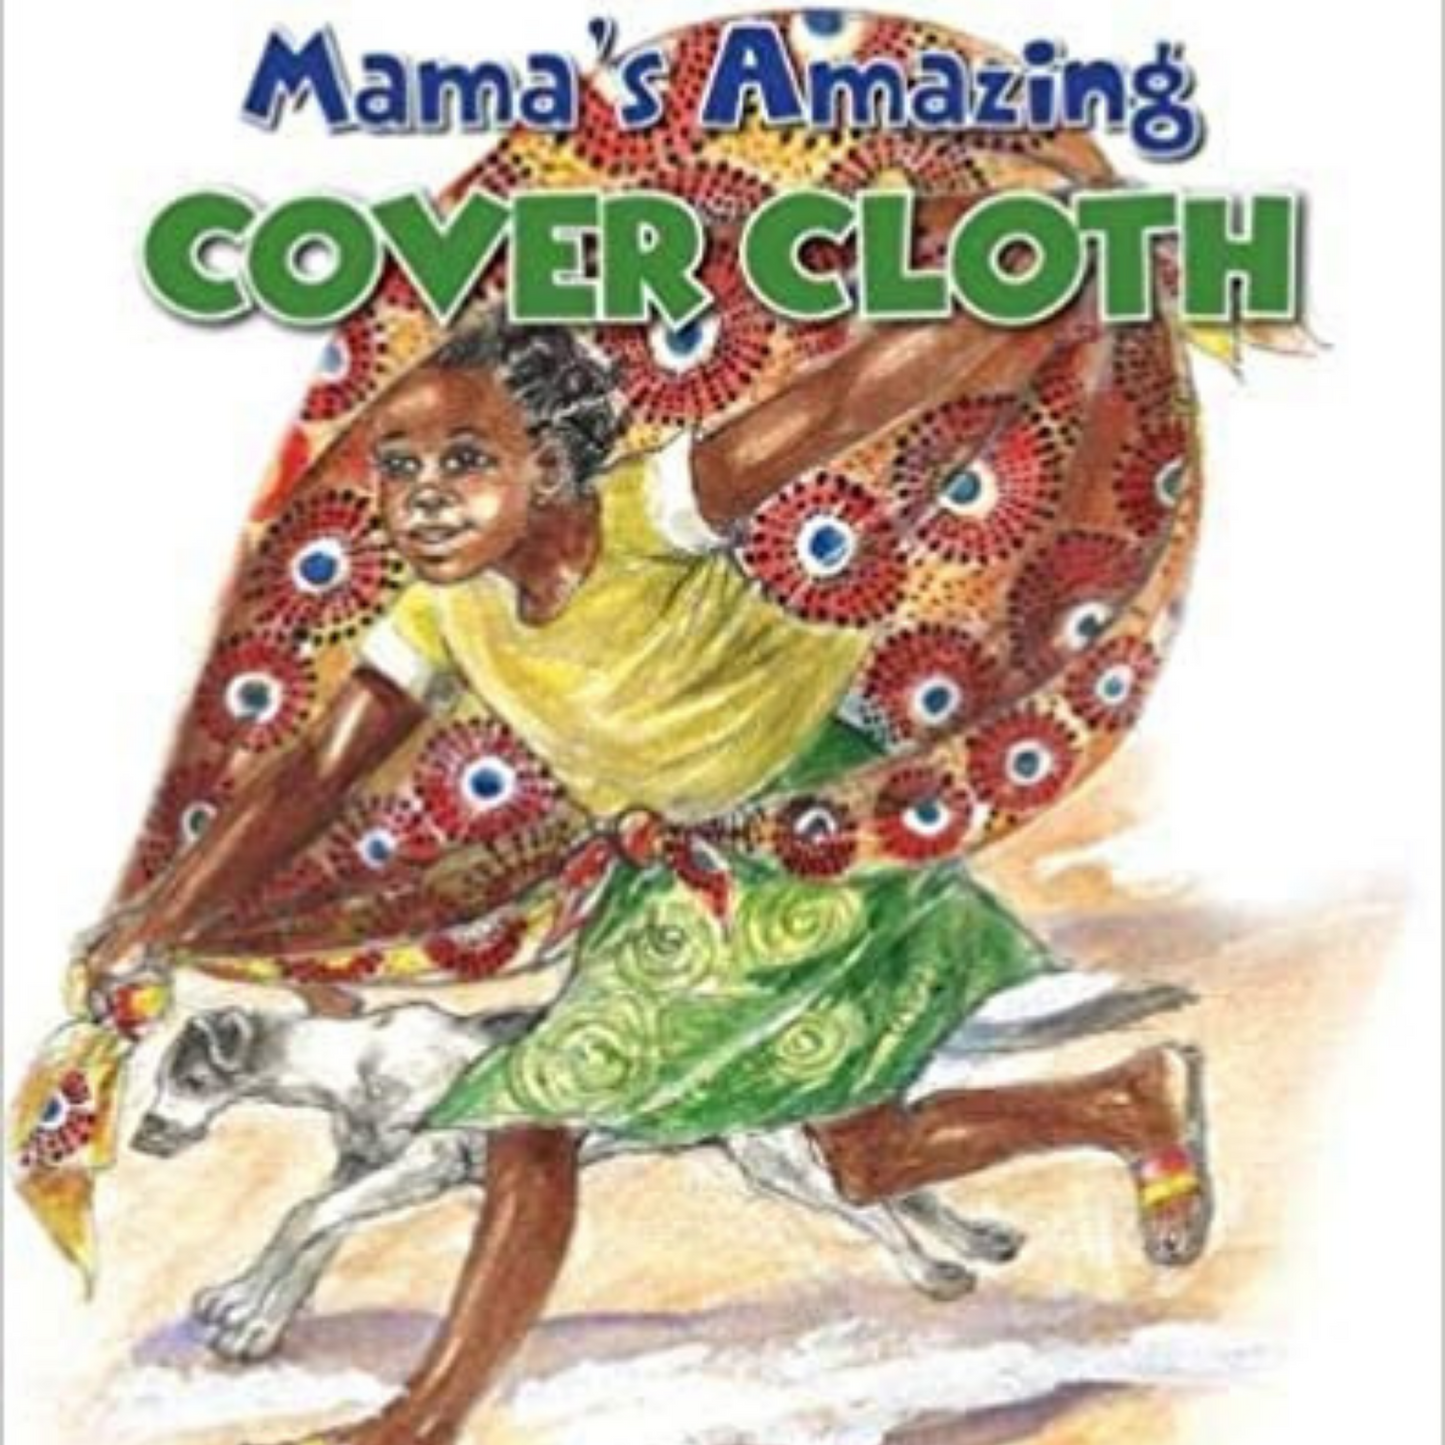 Mama's Amazing Cover Cloth